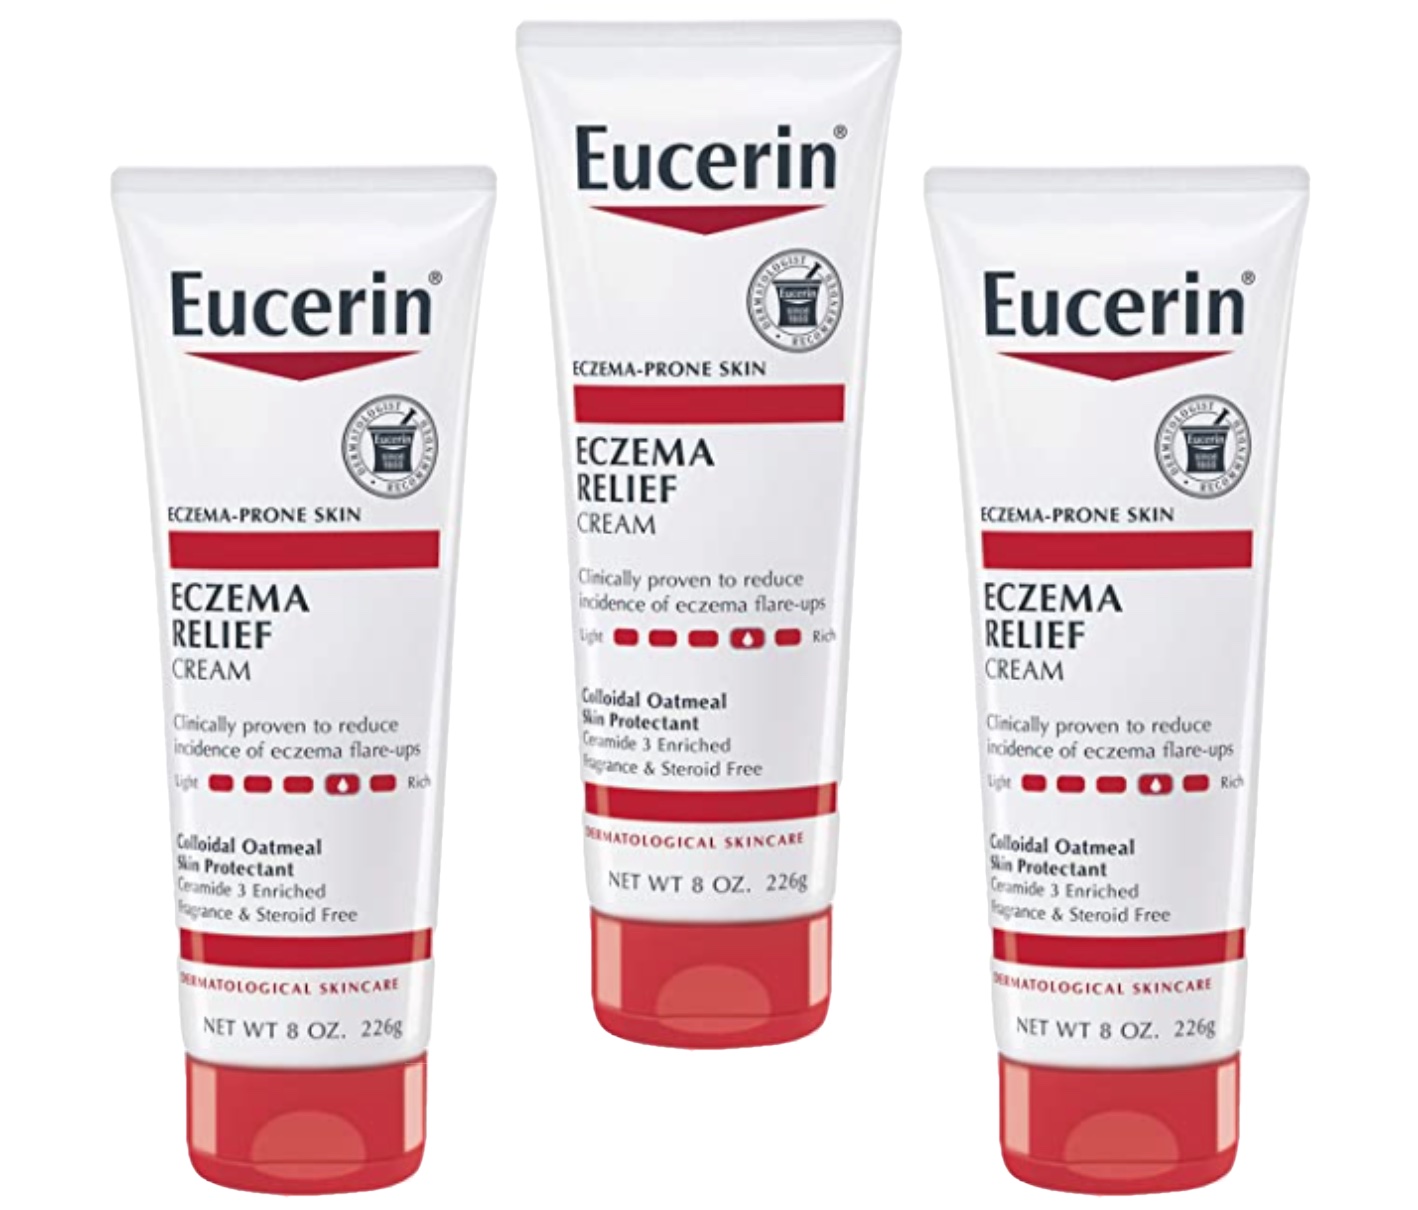 8-Oz Eucerin Eczema Relief Cream 3 for $24.13 ($8.04 Each) + Free Shipping